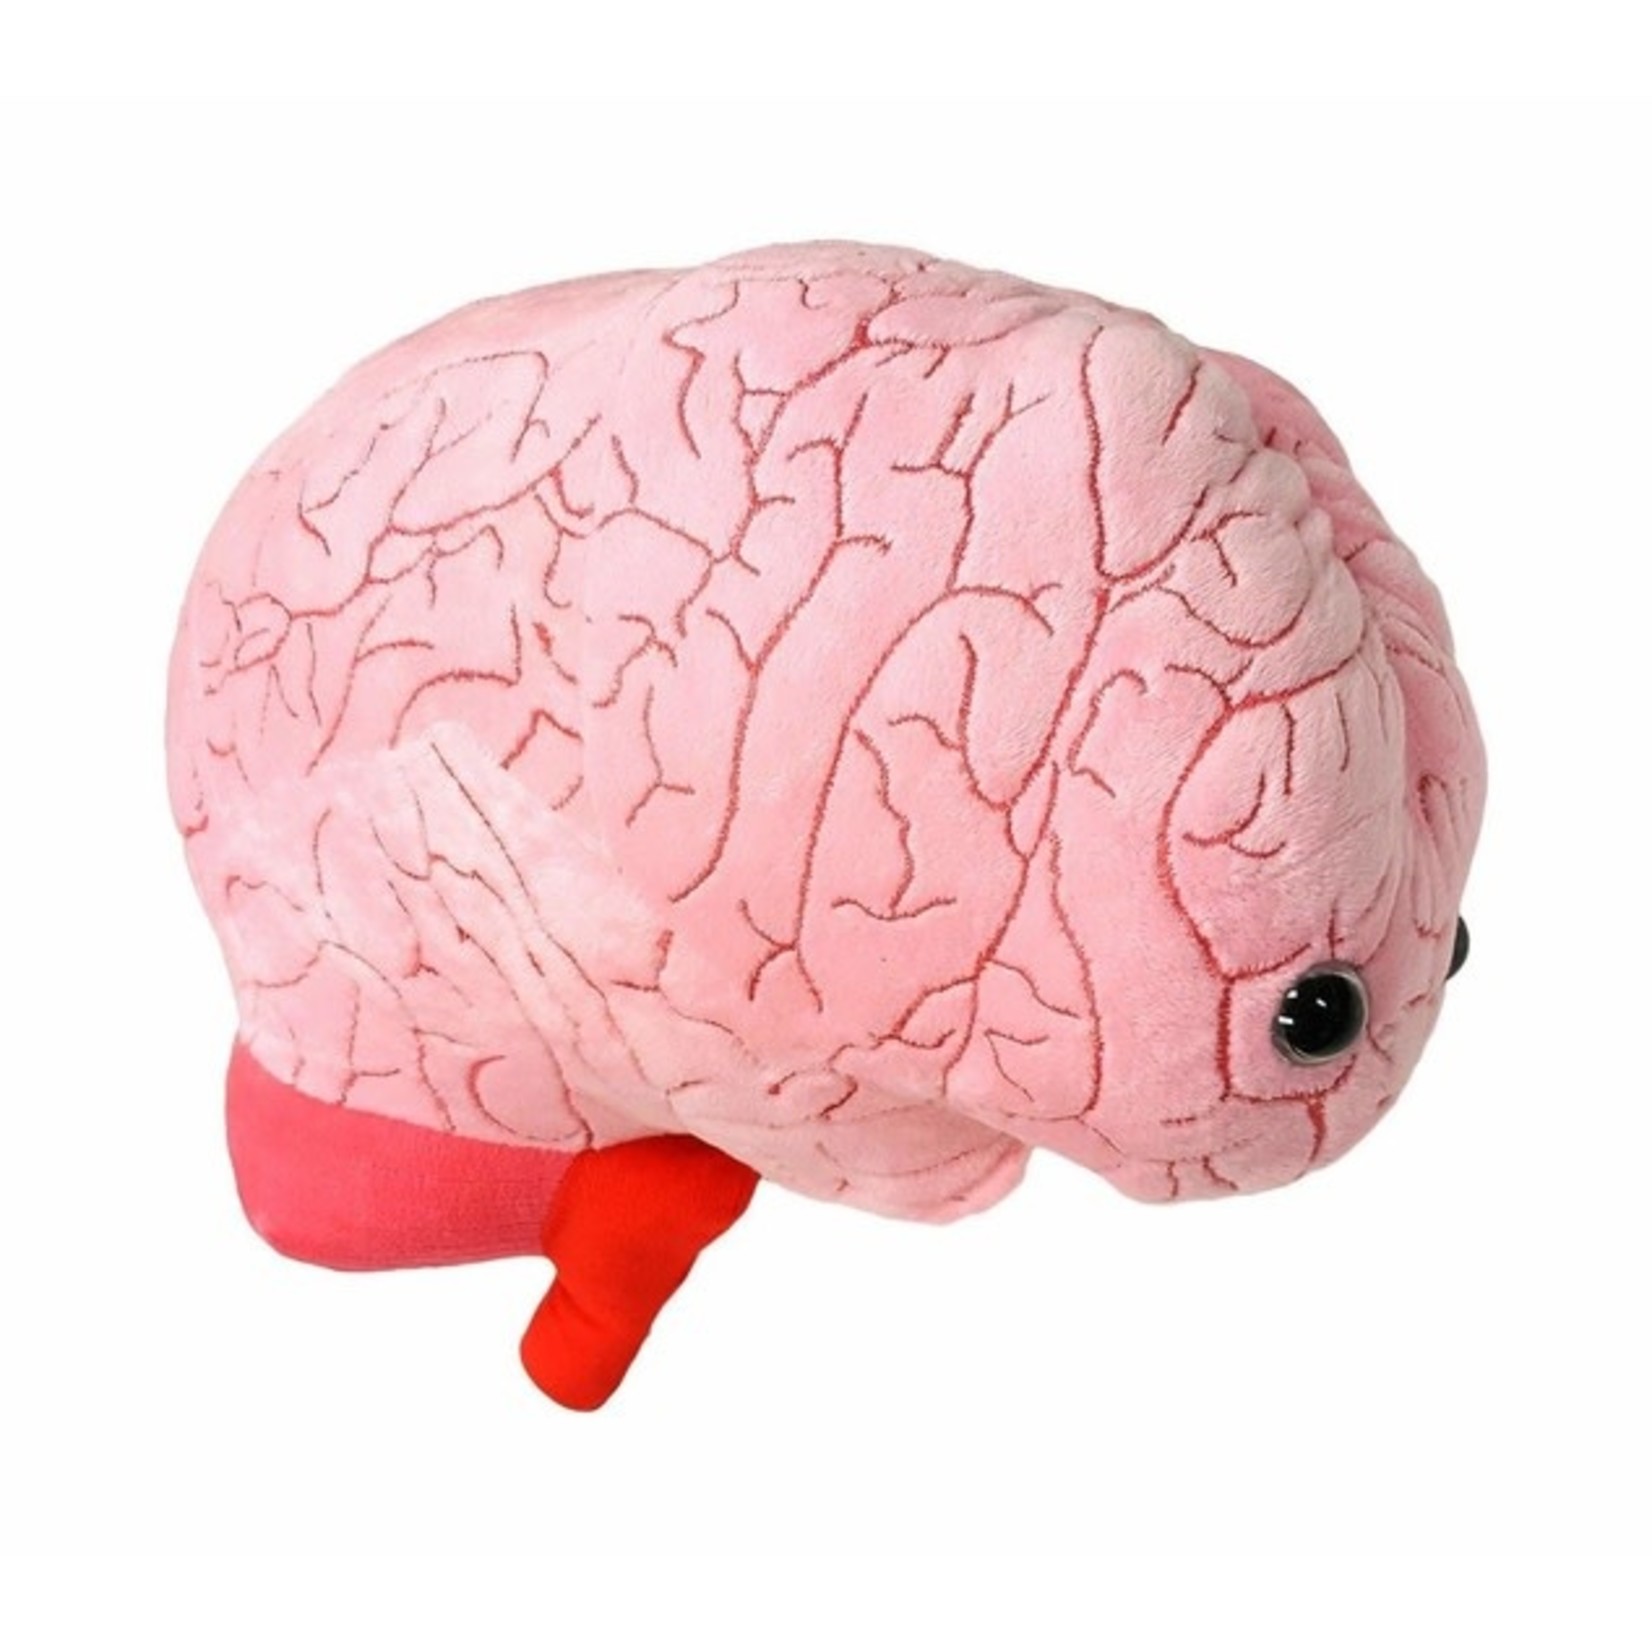 Science and Technology Plush Brain Organ